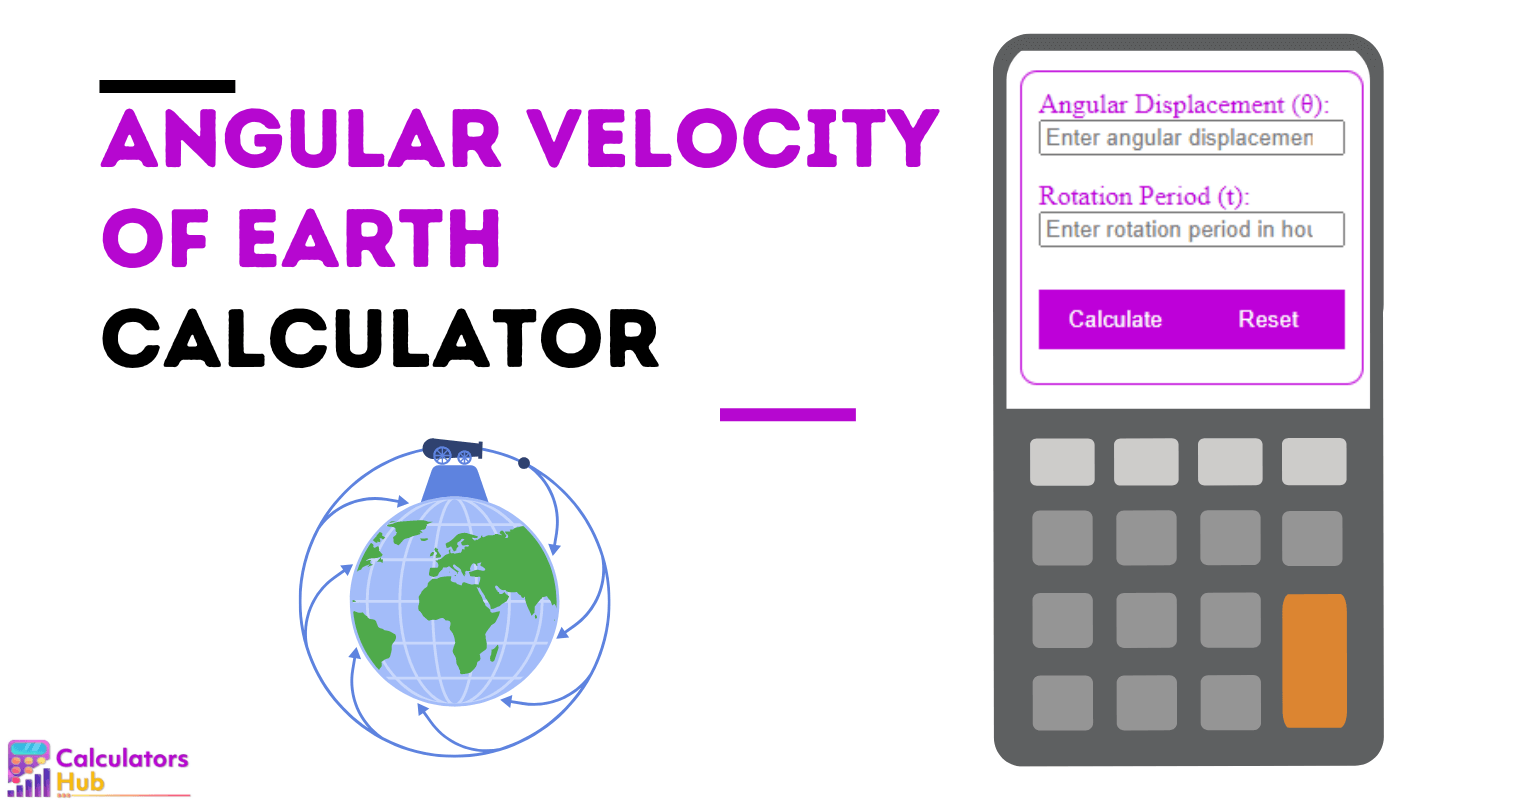 Angular Velocity of Earth Calculator